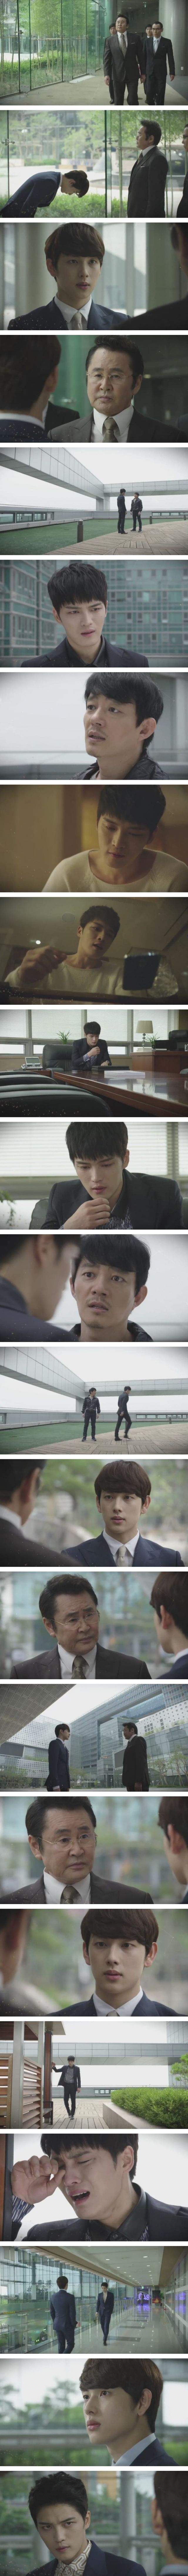 episode 21 captures for the Korean drama 'Triangle - Drama'